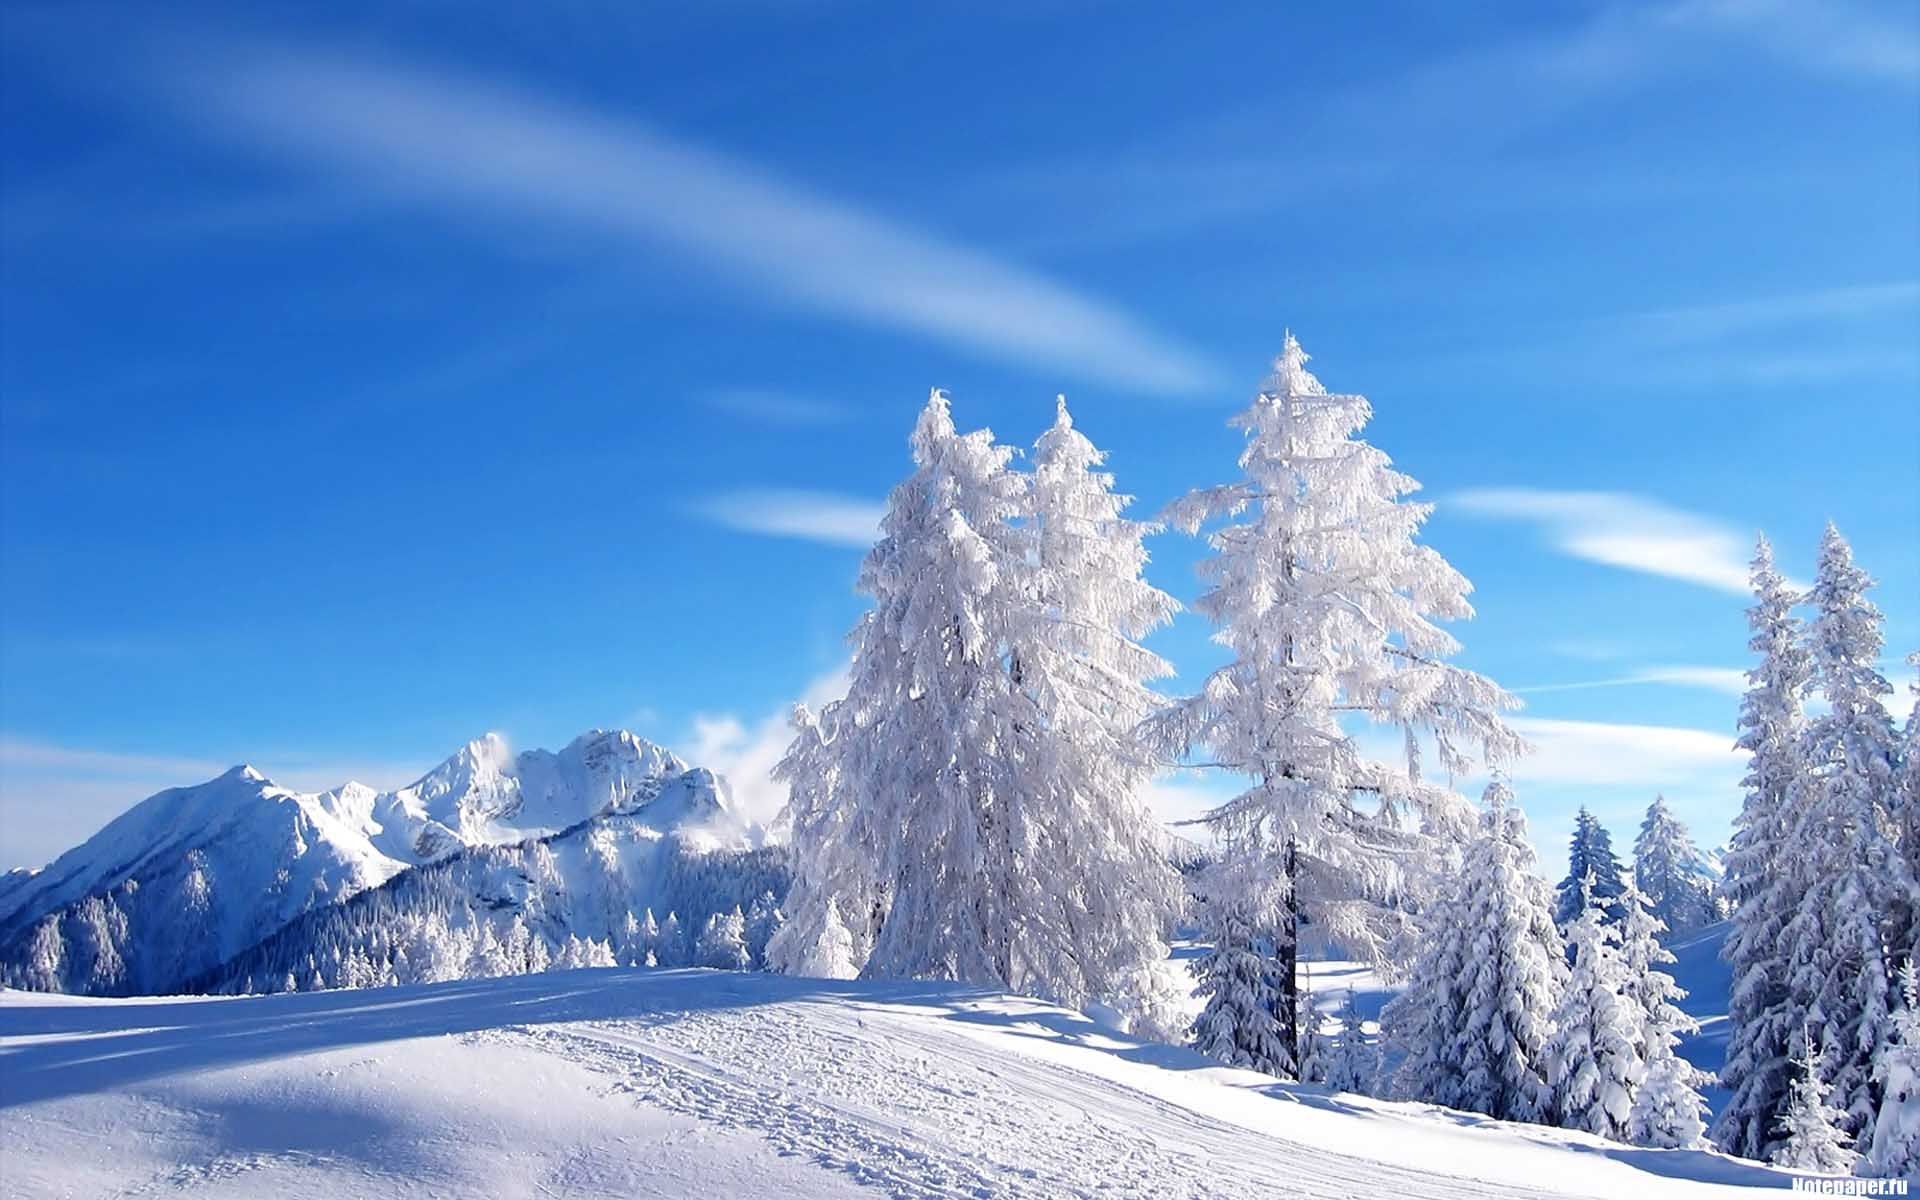 Snow Scenes Desktop Background. Snow Scene. Winter landscape, Winter nature, Winter scenes